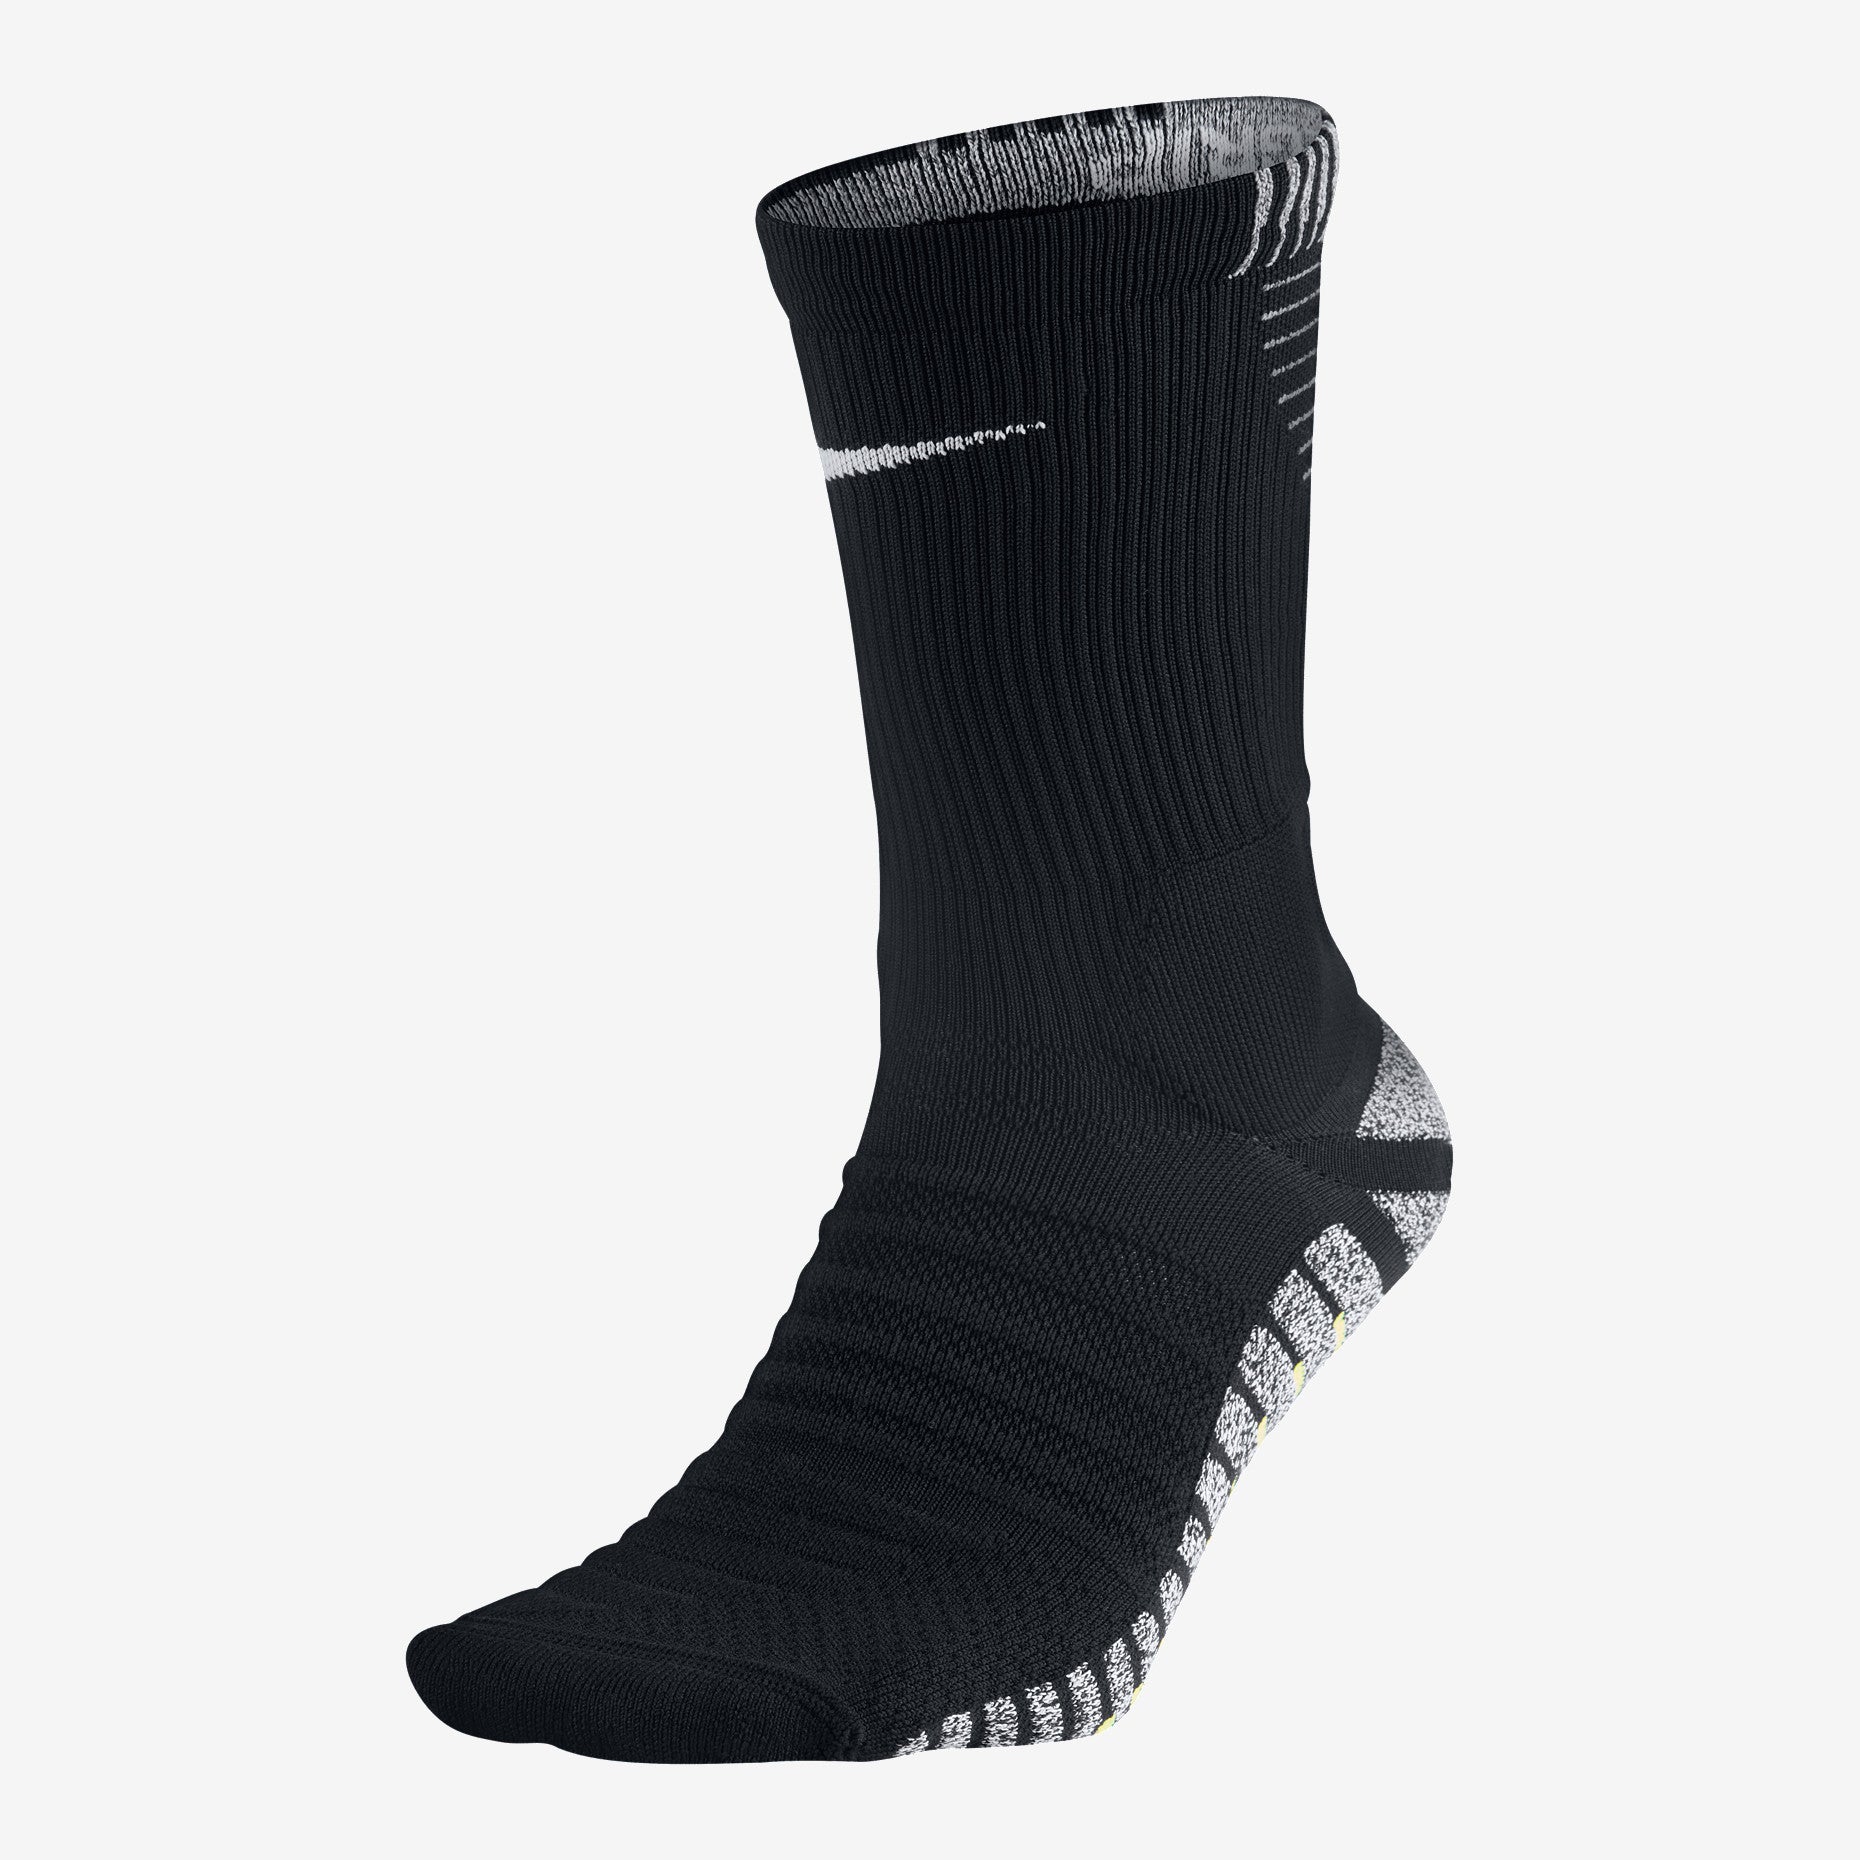 NikeGrip Strike Cushion Football Socks, Sports Equipment, Sports